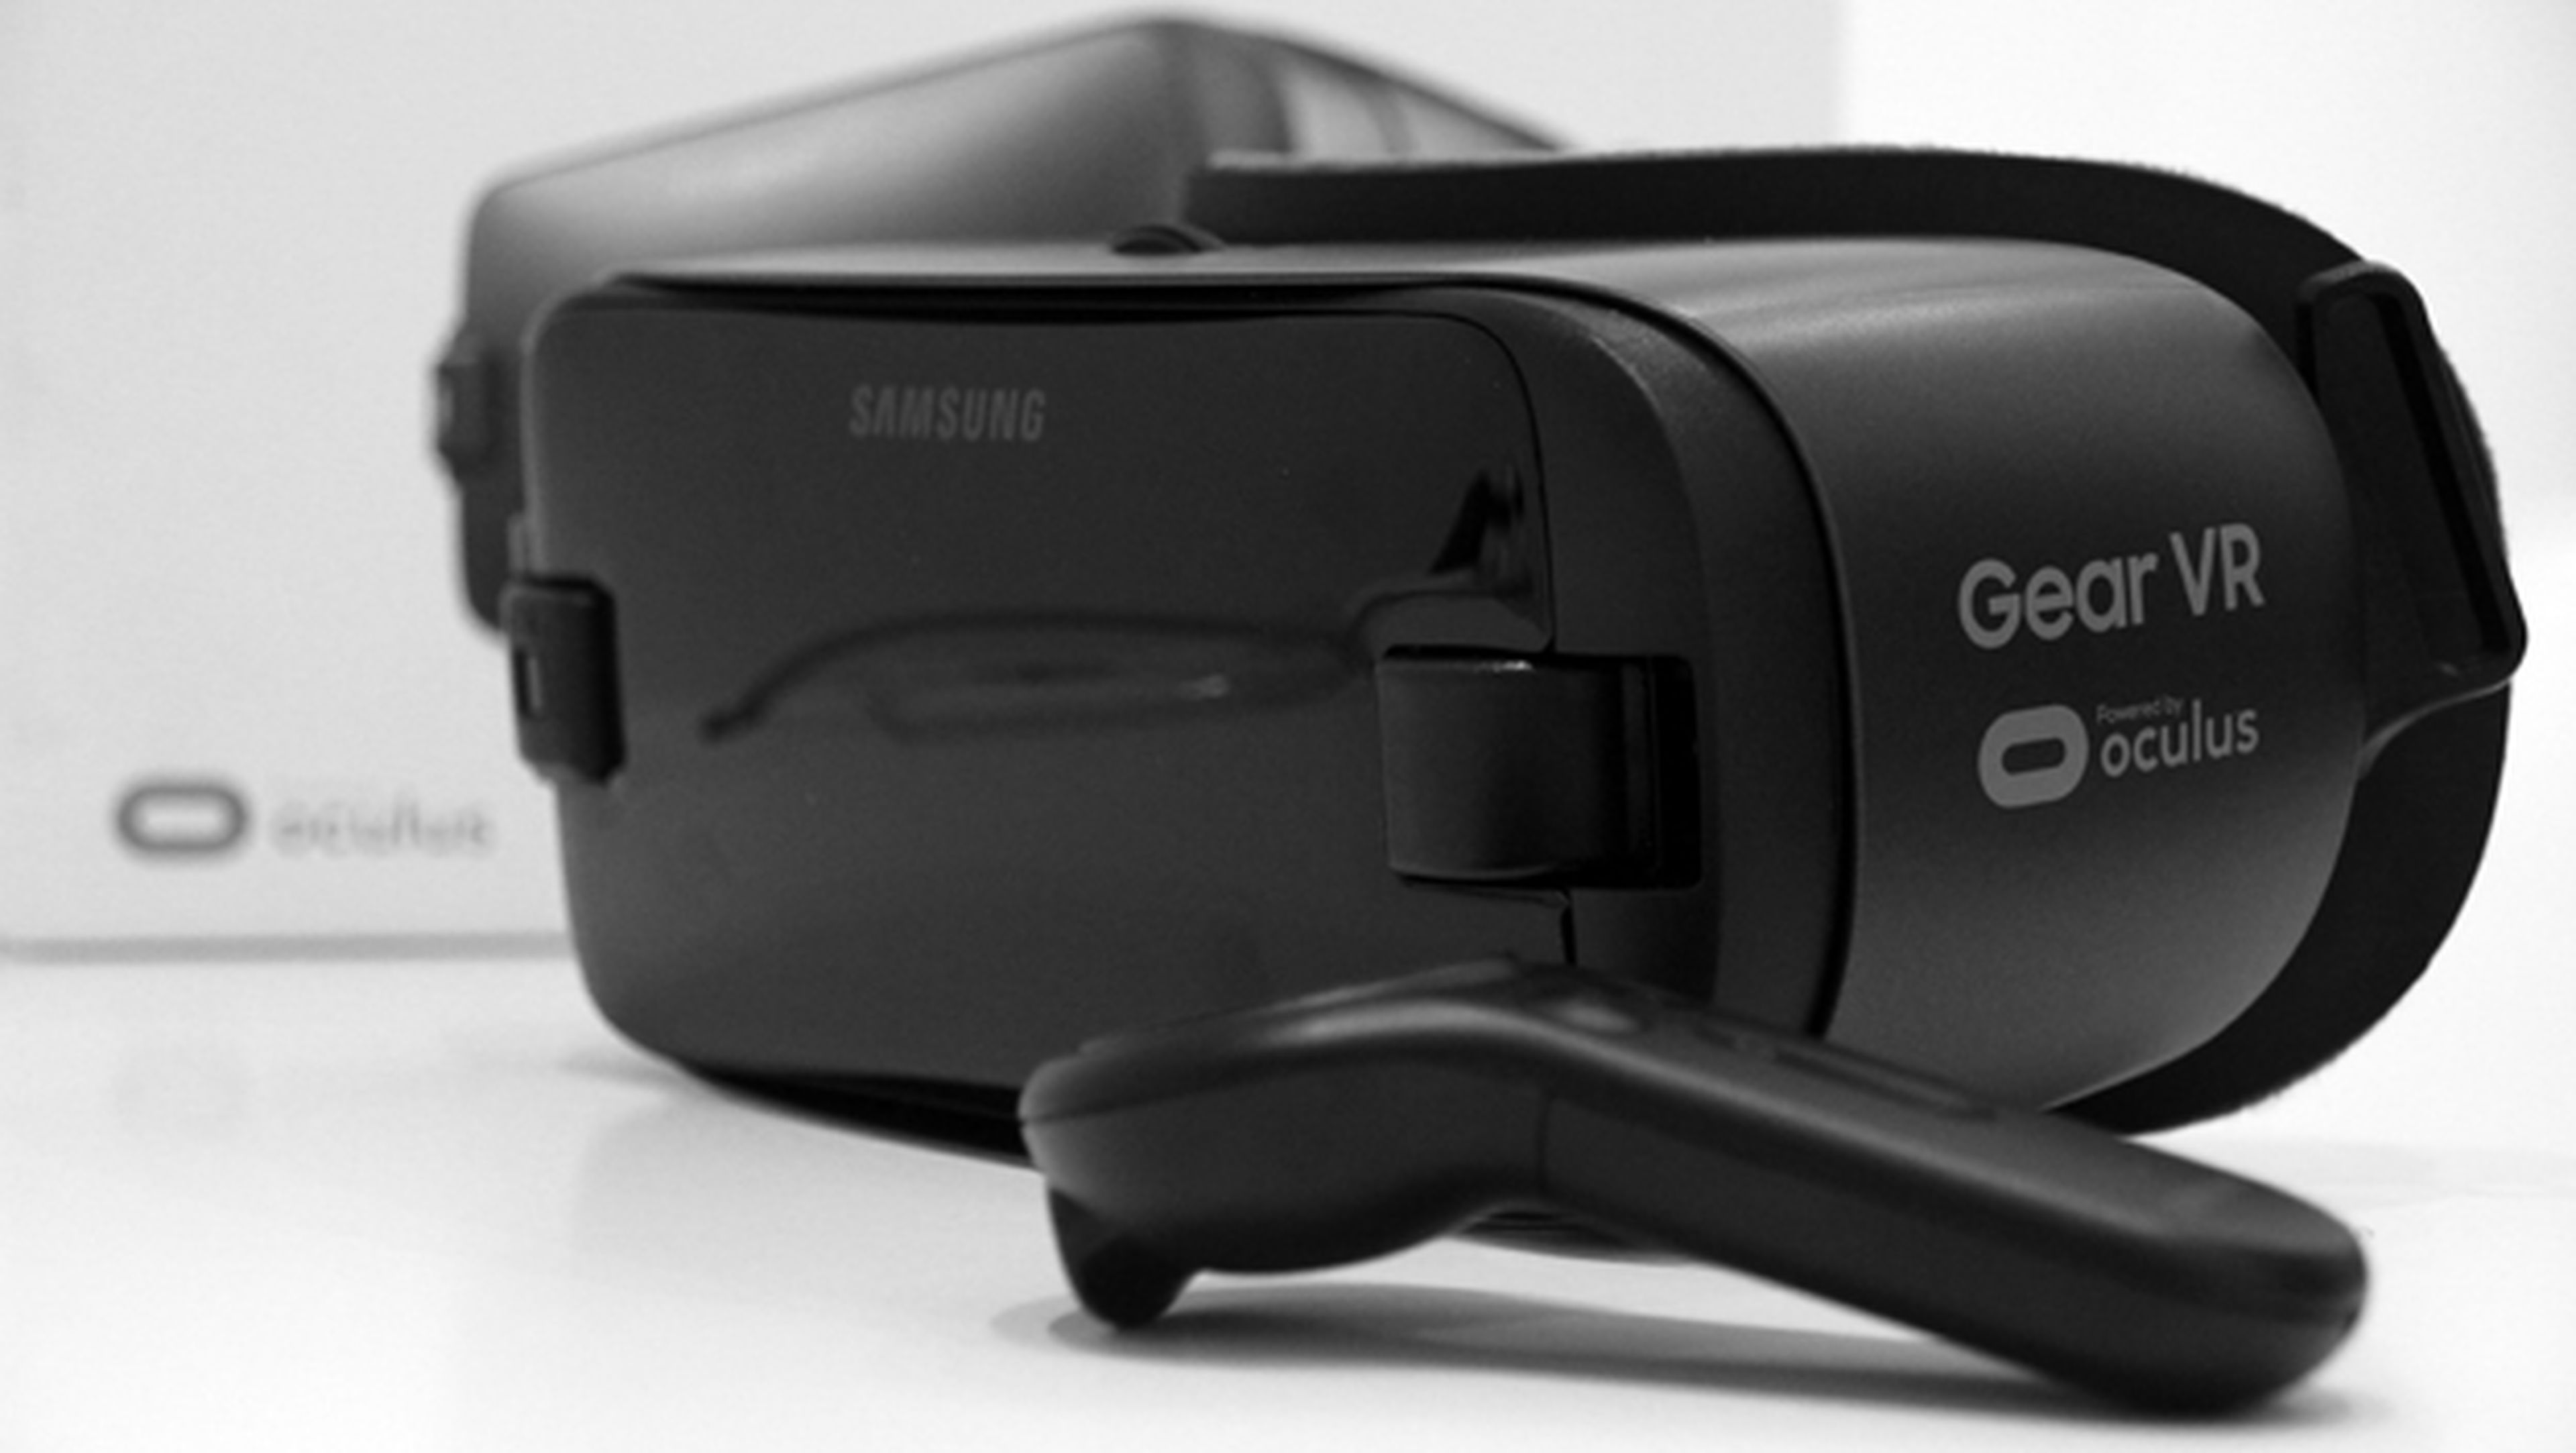 samsung gear VR oculus